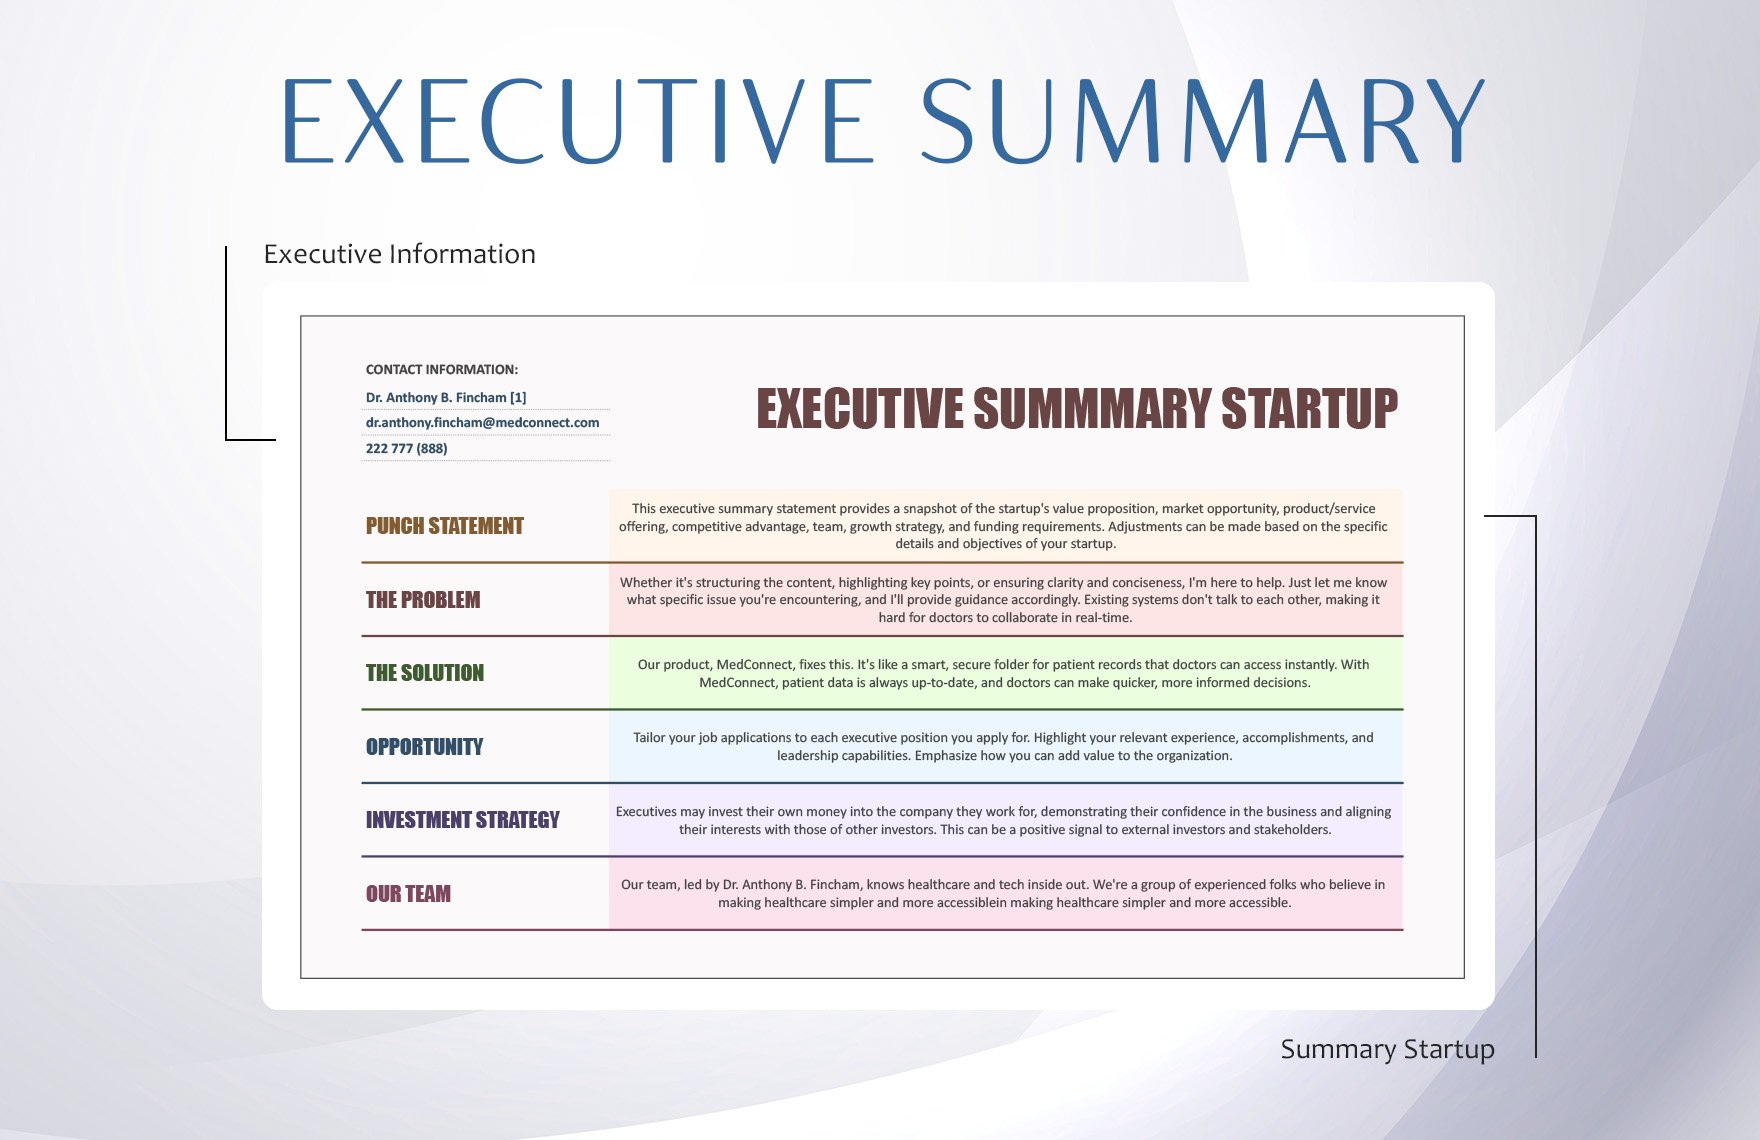 Executive Summary Startup Template